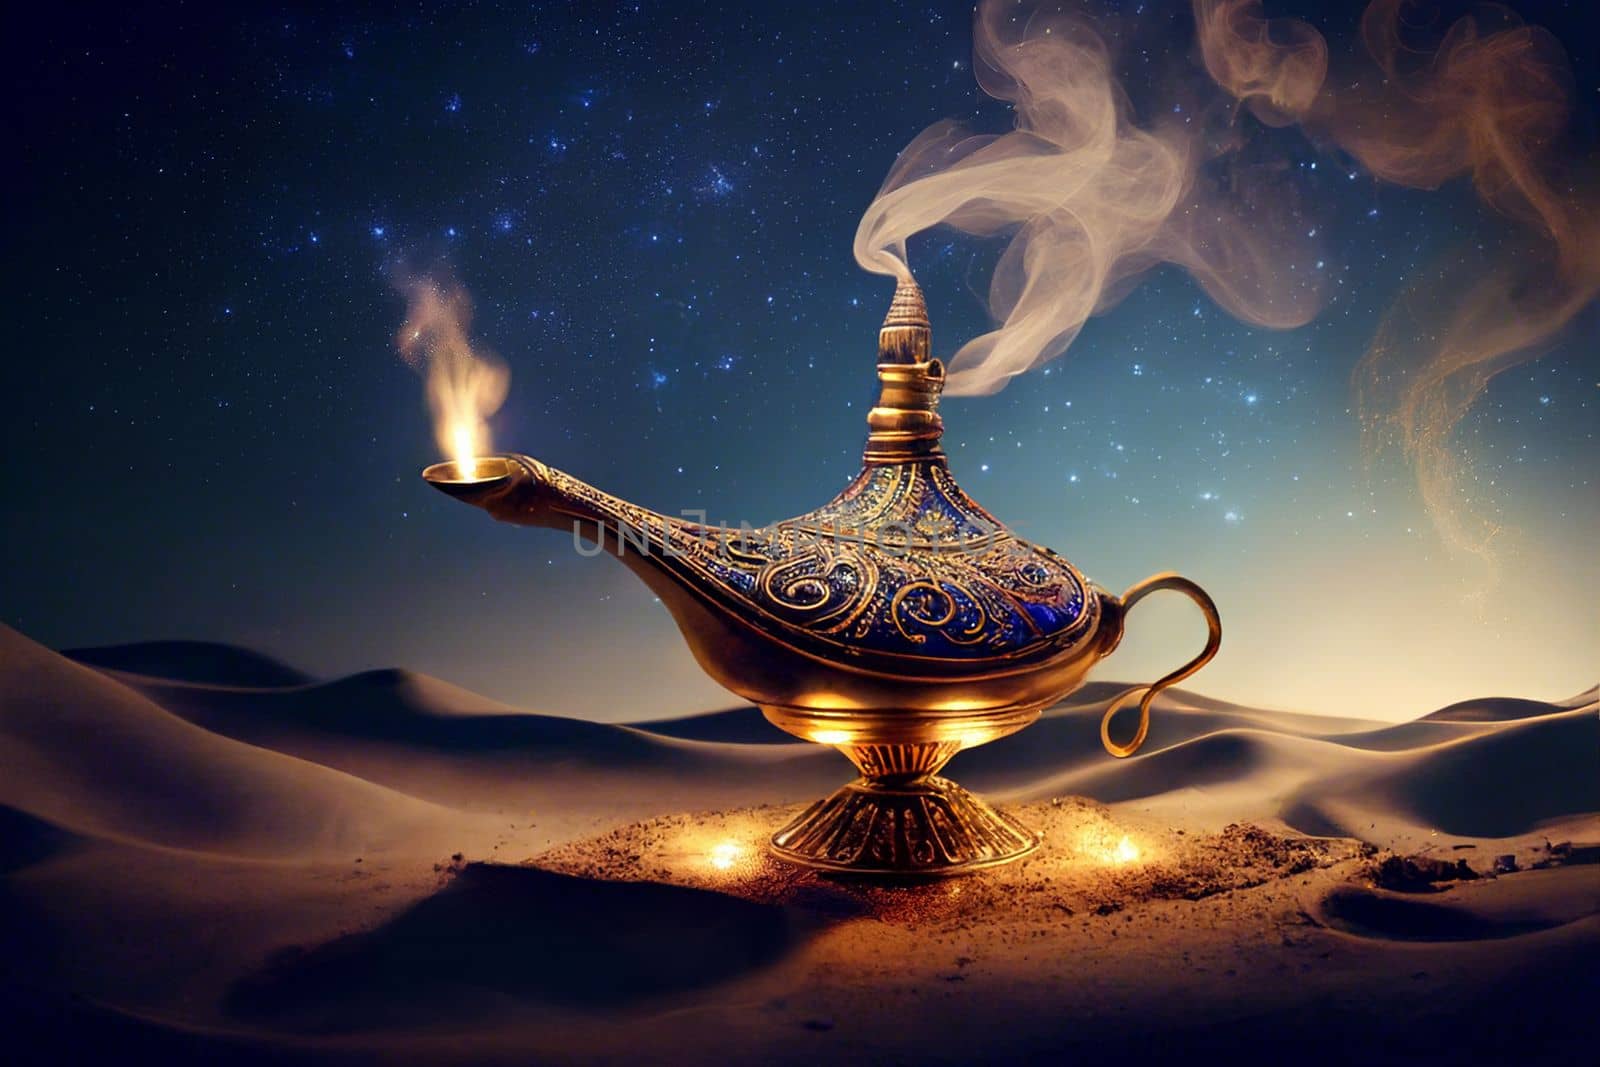 magic lamp with genie in the desert at night by studiodav